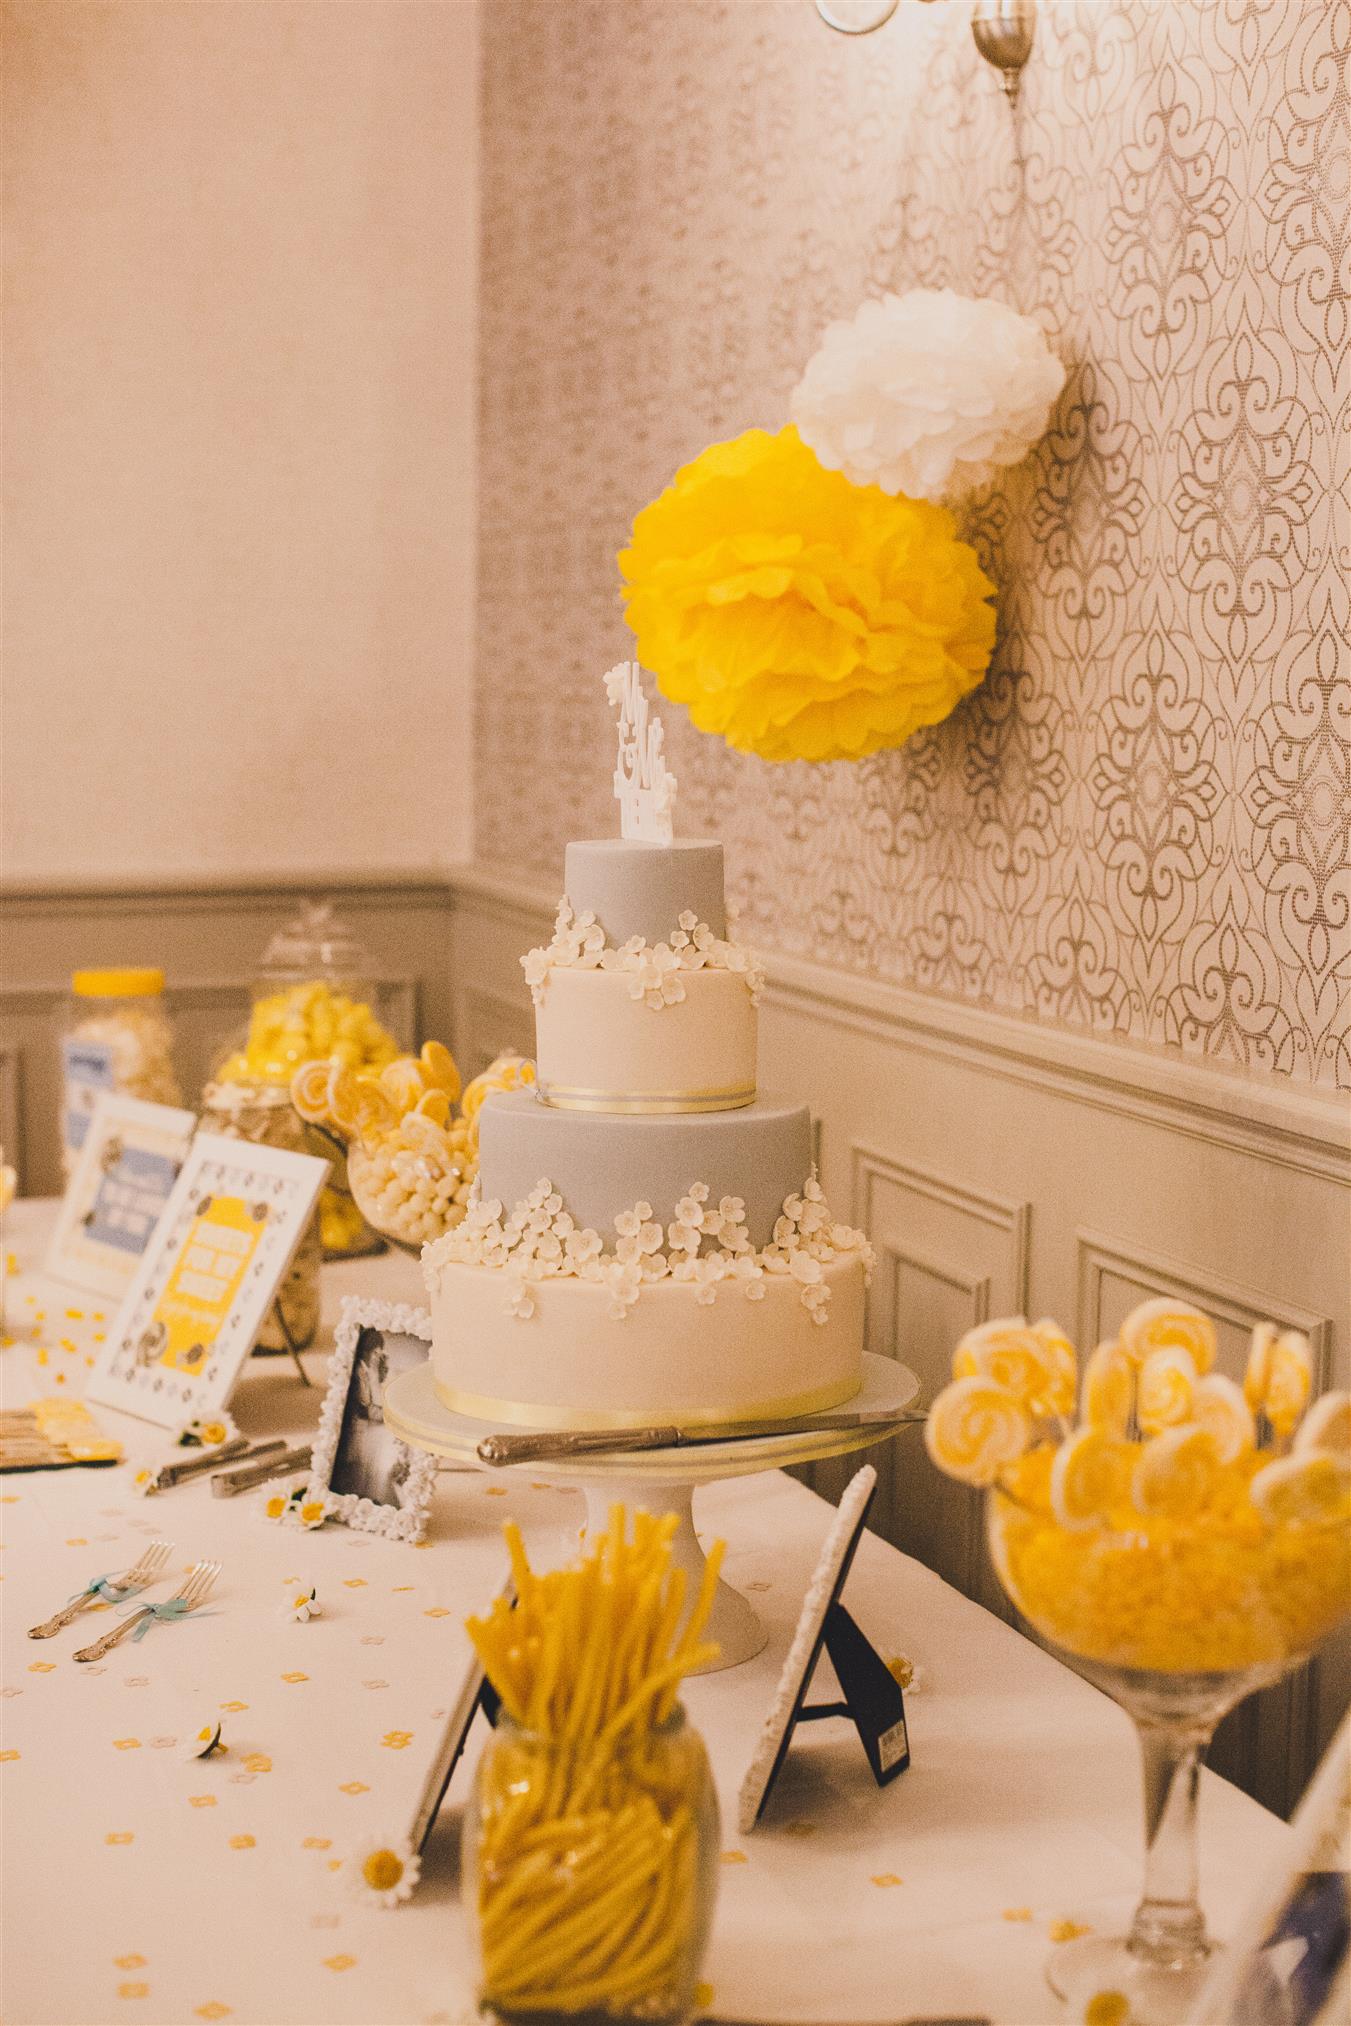 Wedding Cake - A Spring 1960s Inspired Wedding